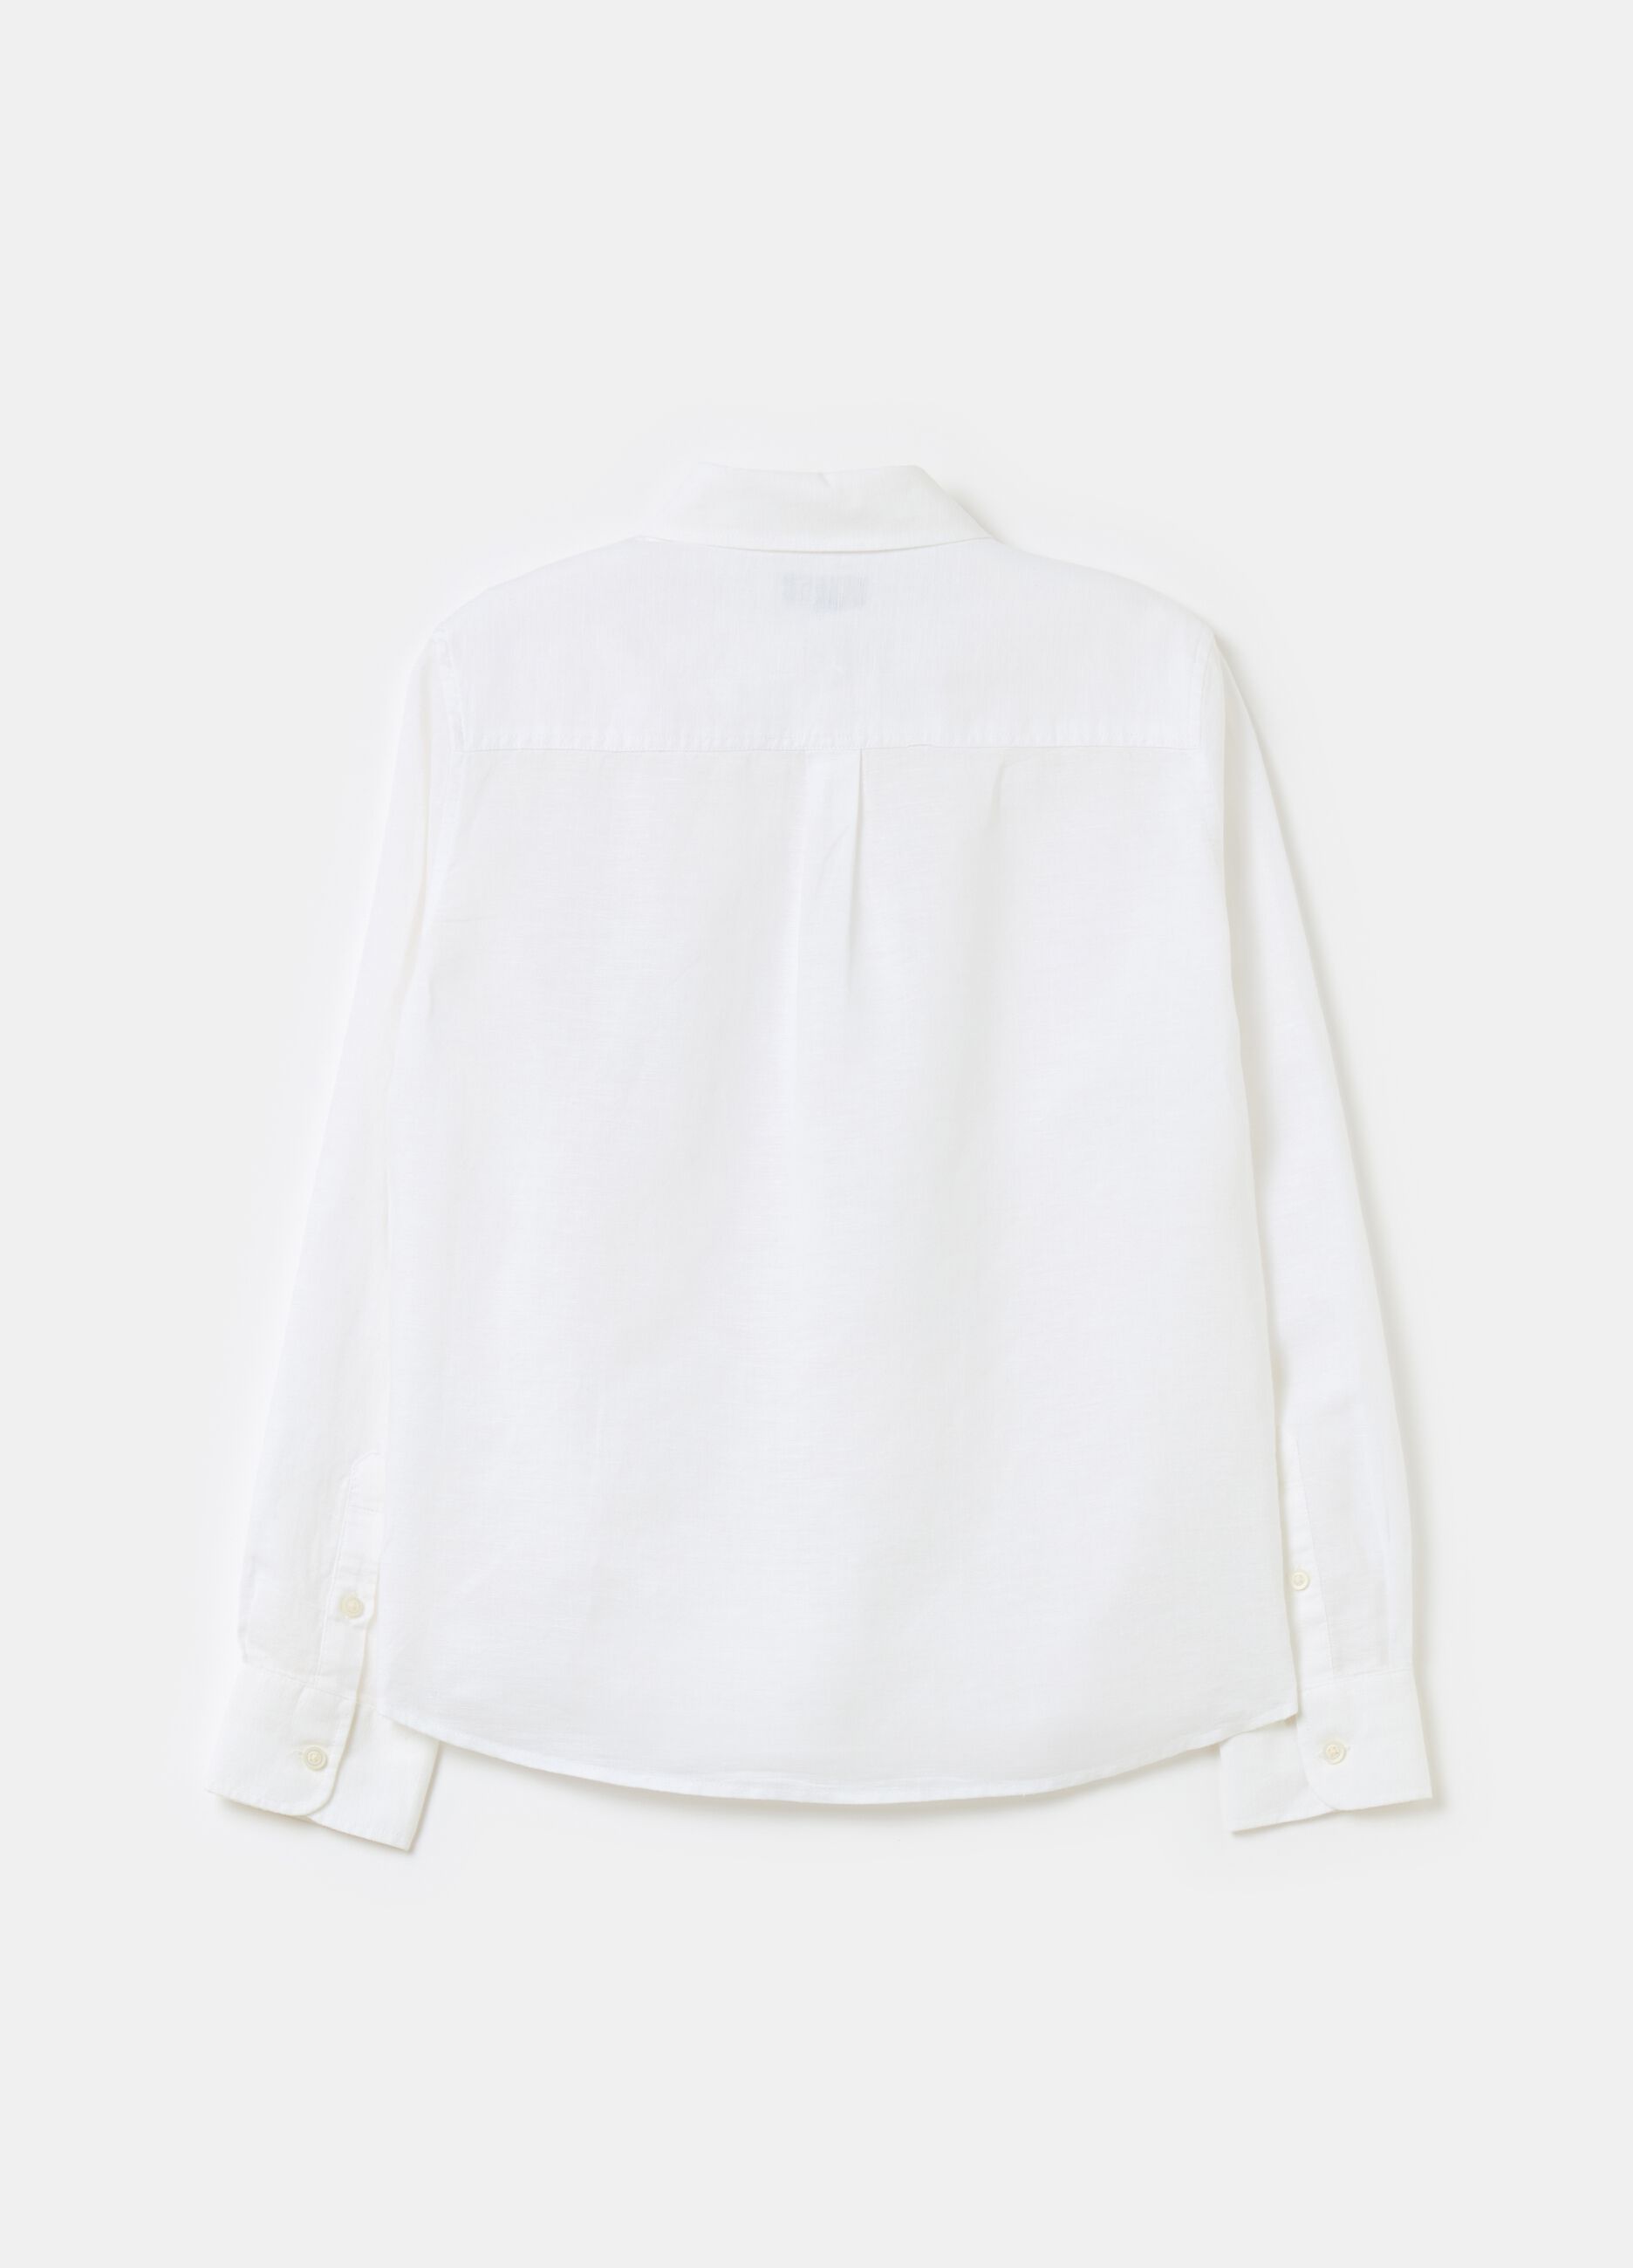 Linen and cotton shirt